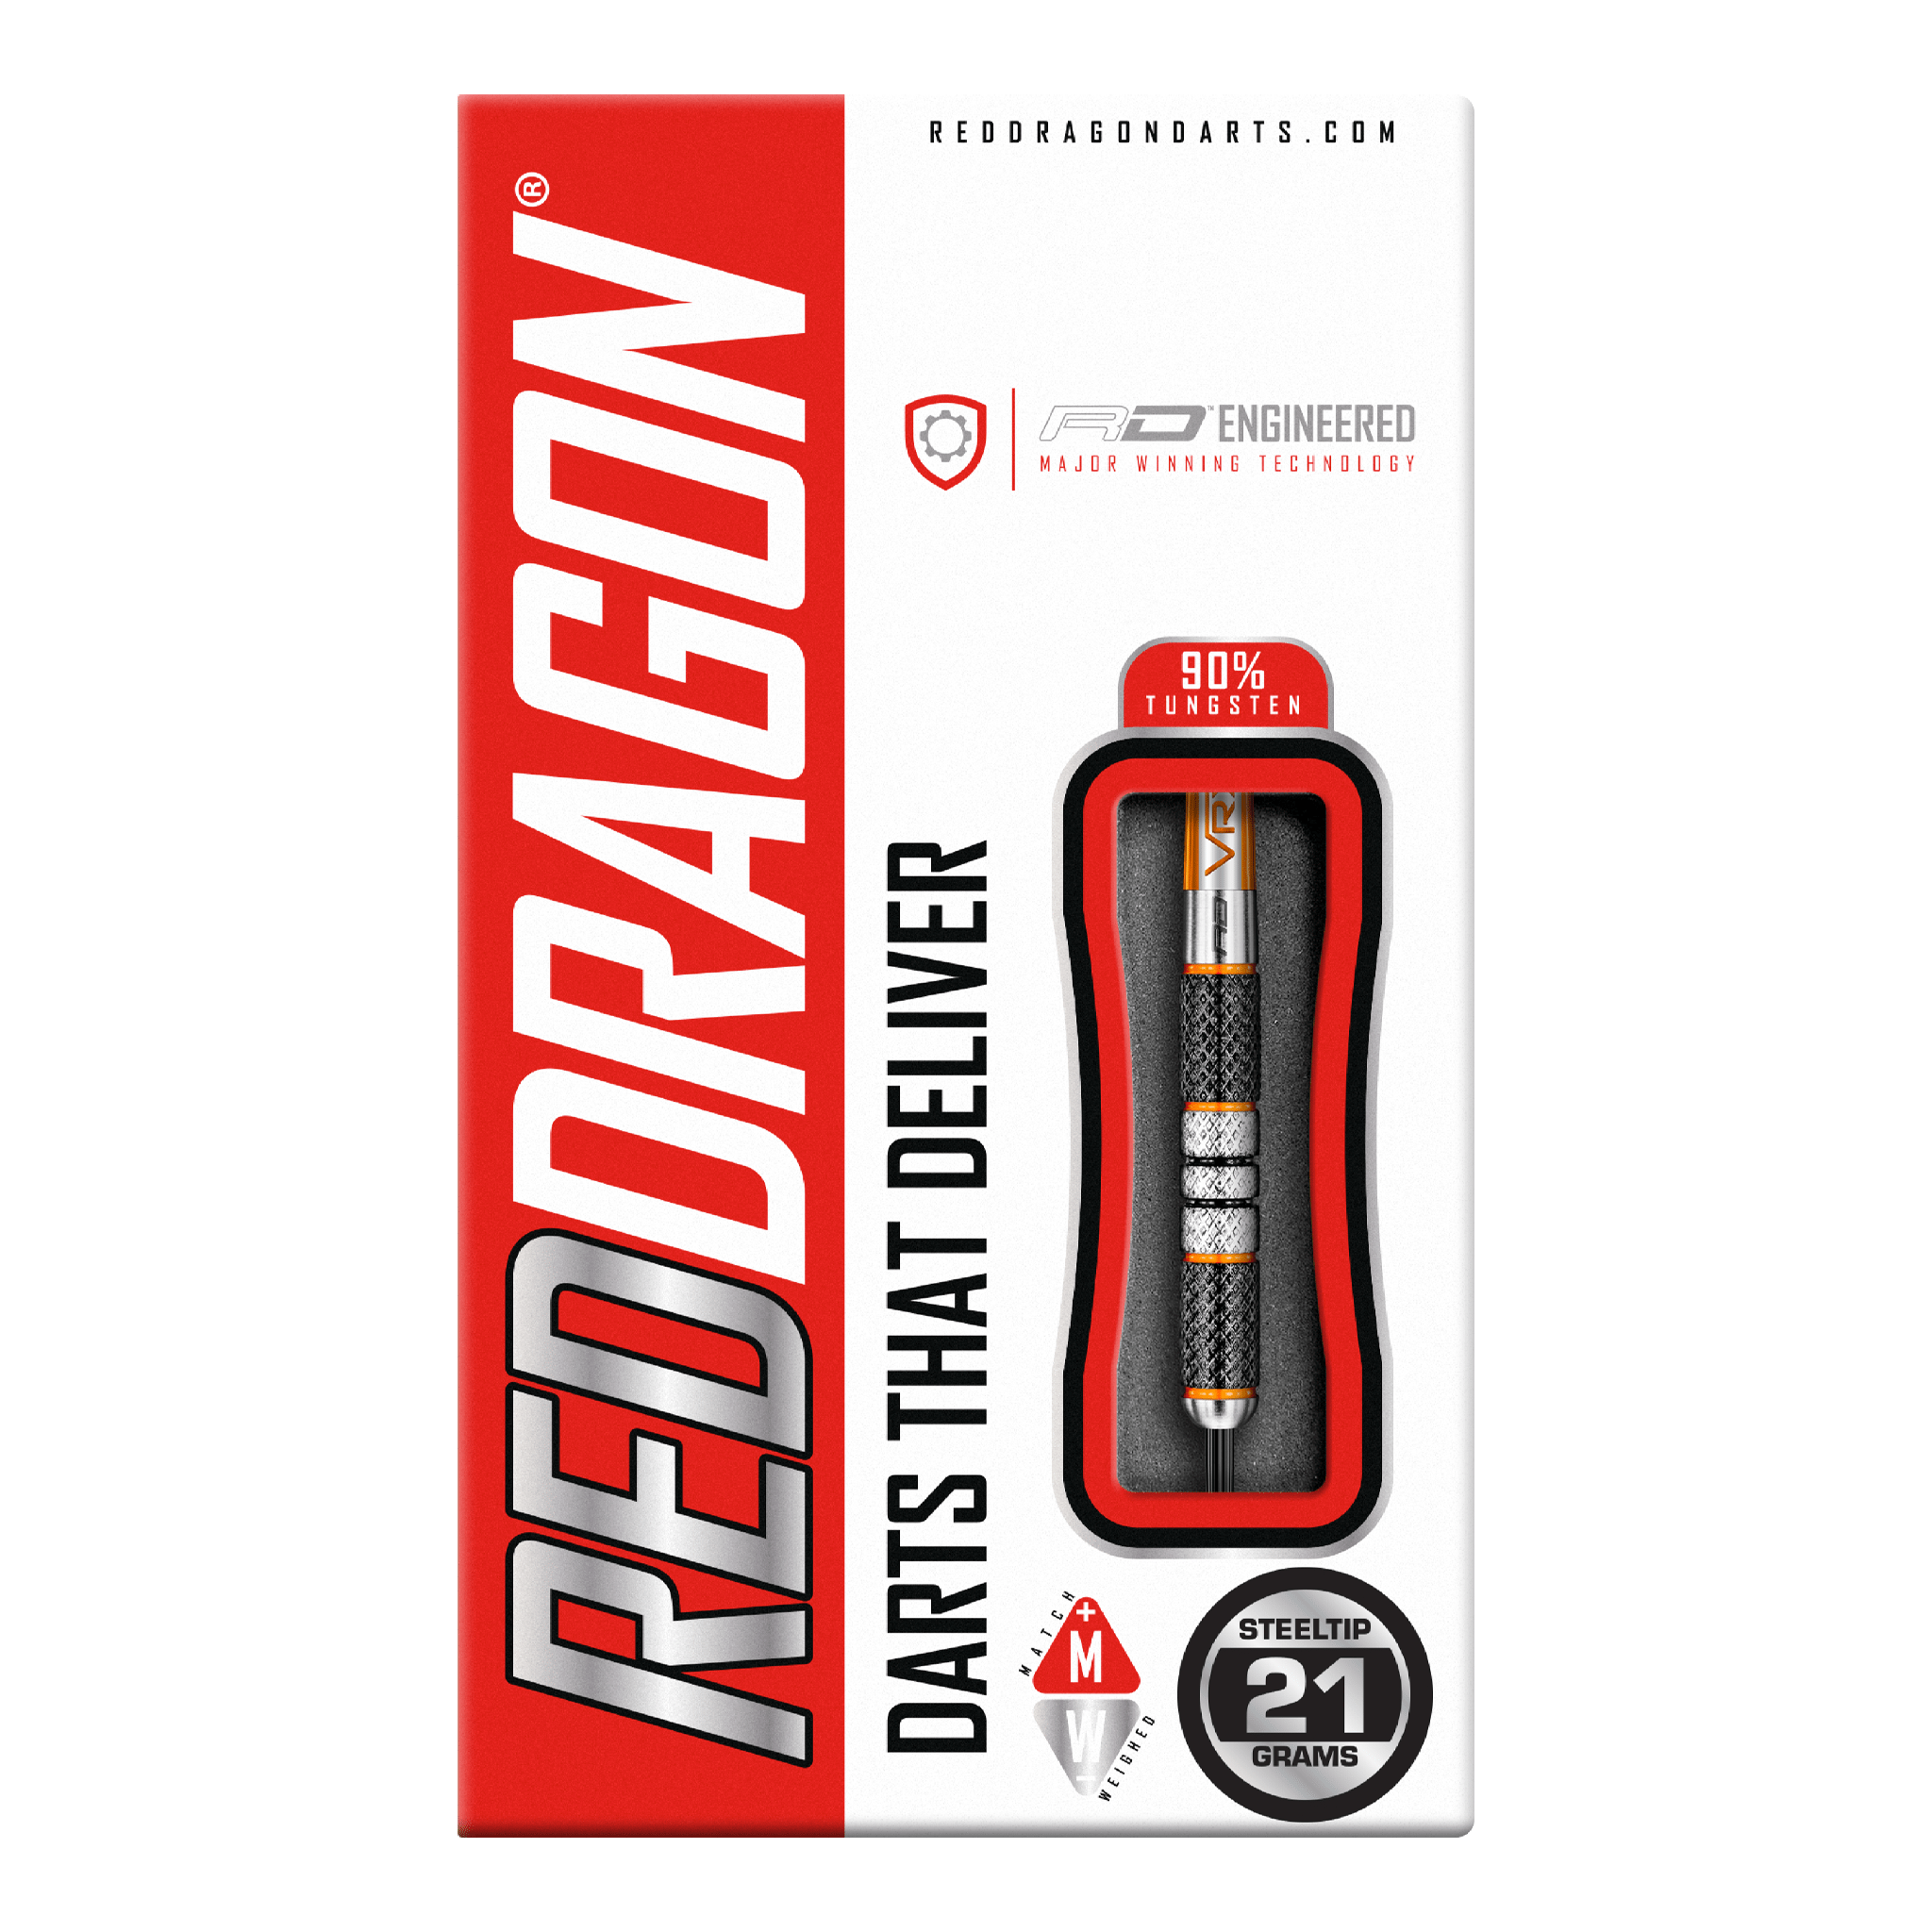 Red Dragon Amberjack 2 - 90% Tungsten Steel Tip Darts 21 Grams Darts